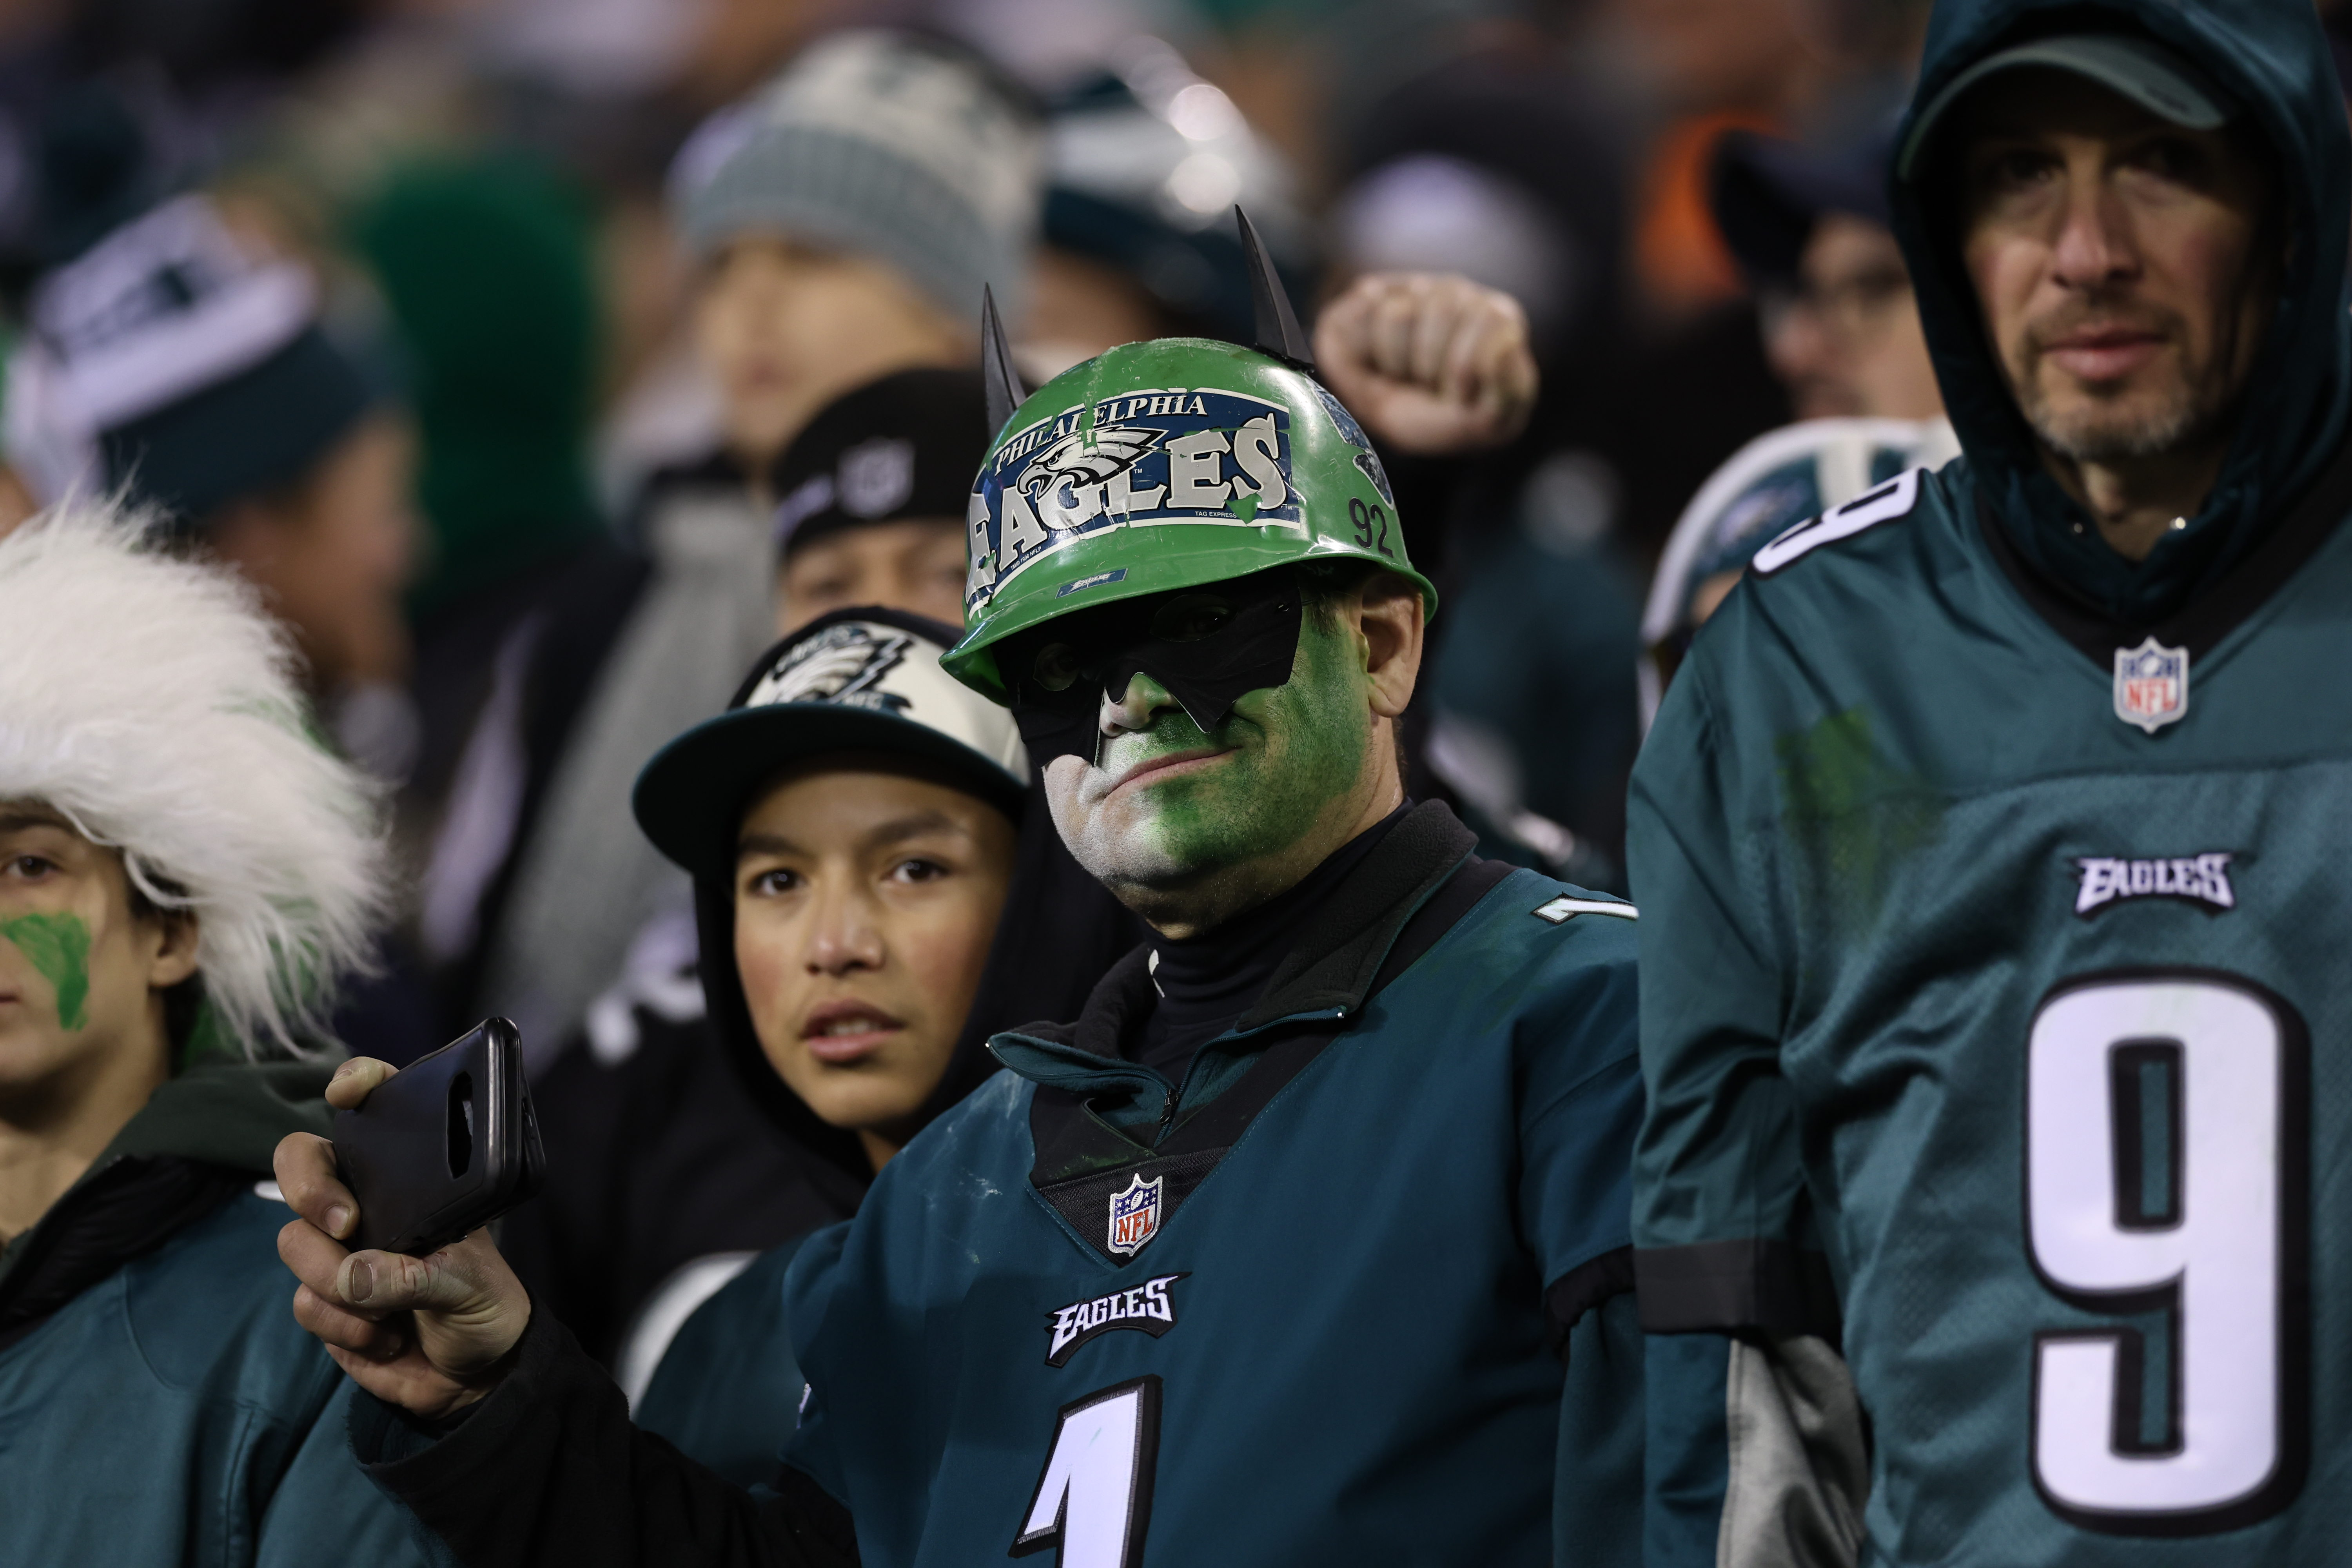 Eagles Fans Going Crazy After Super Bowl Win (Compilation) 